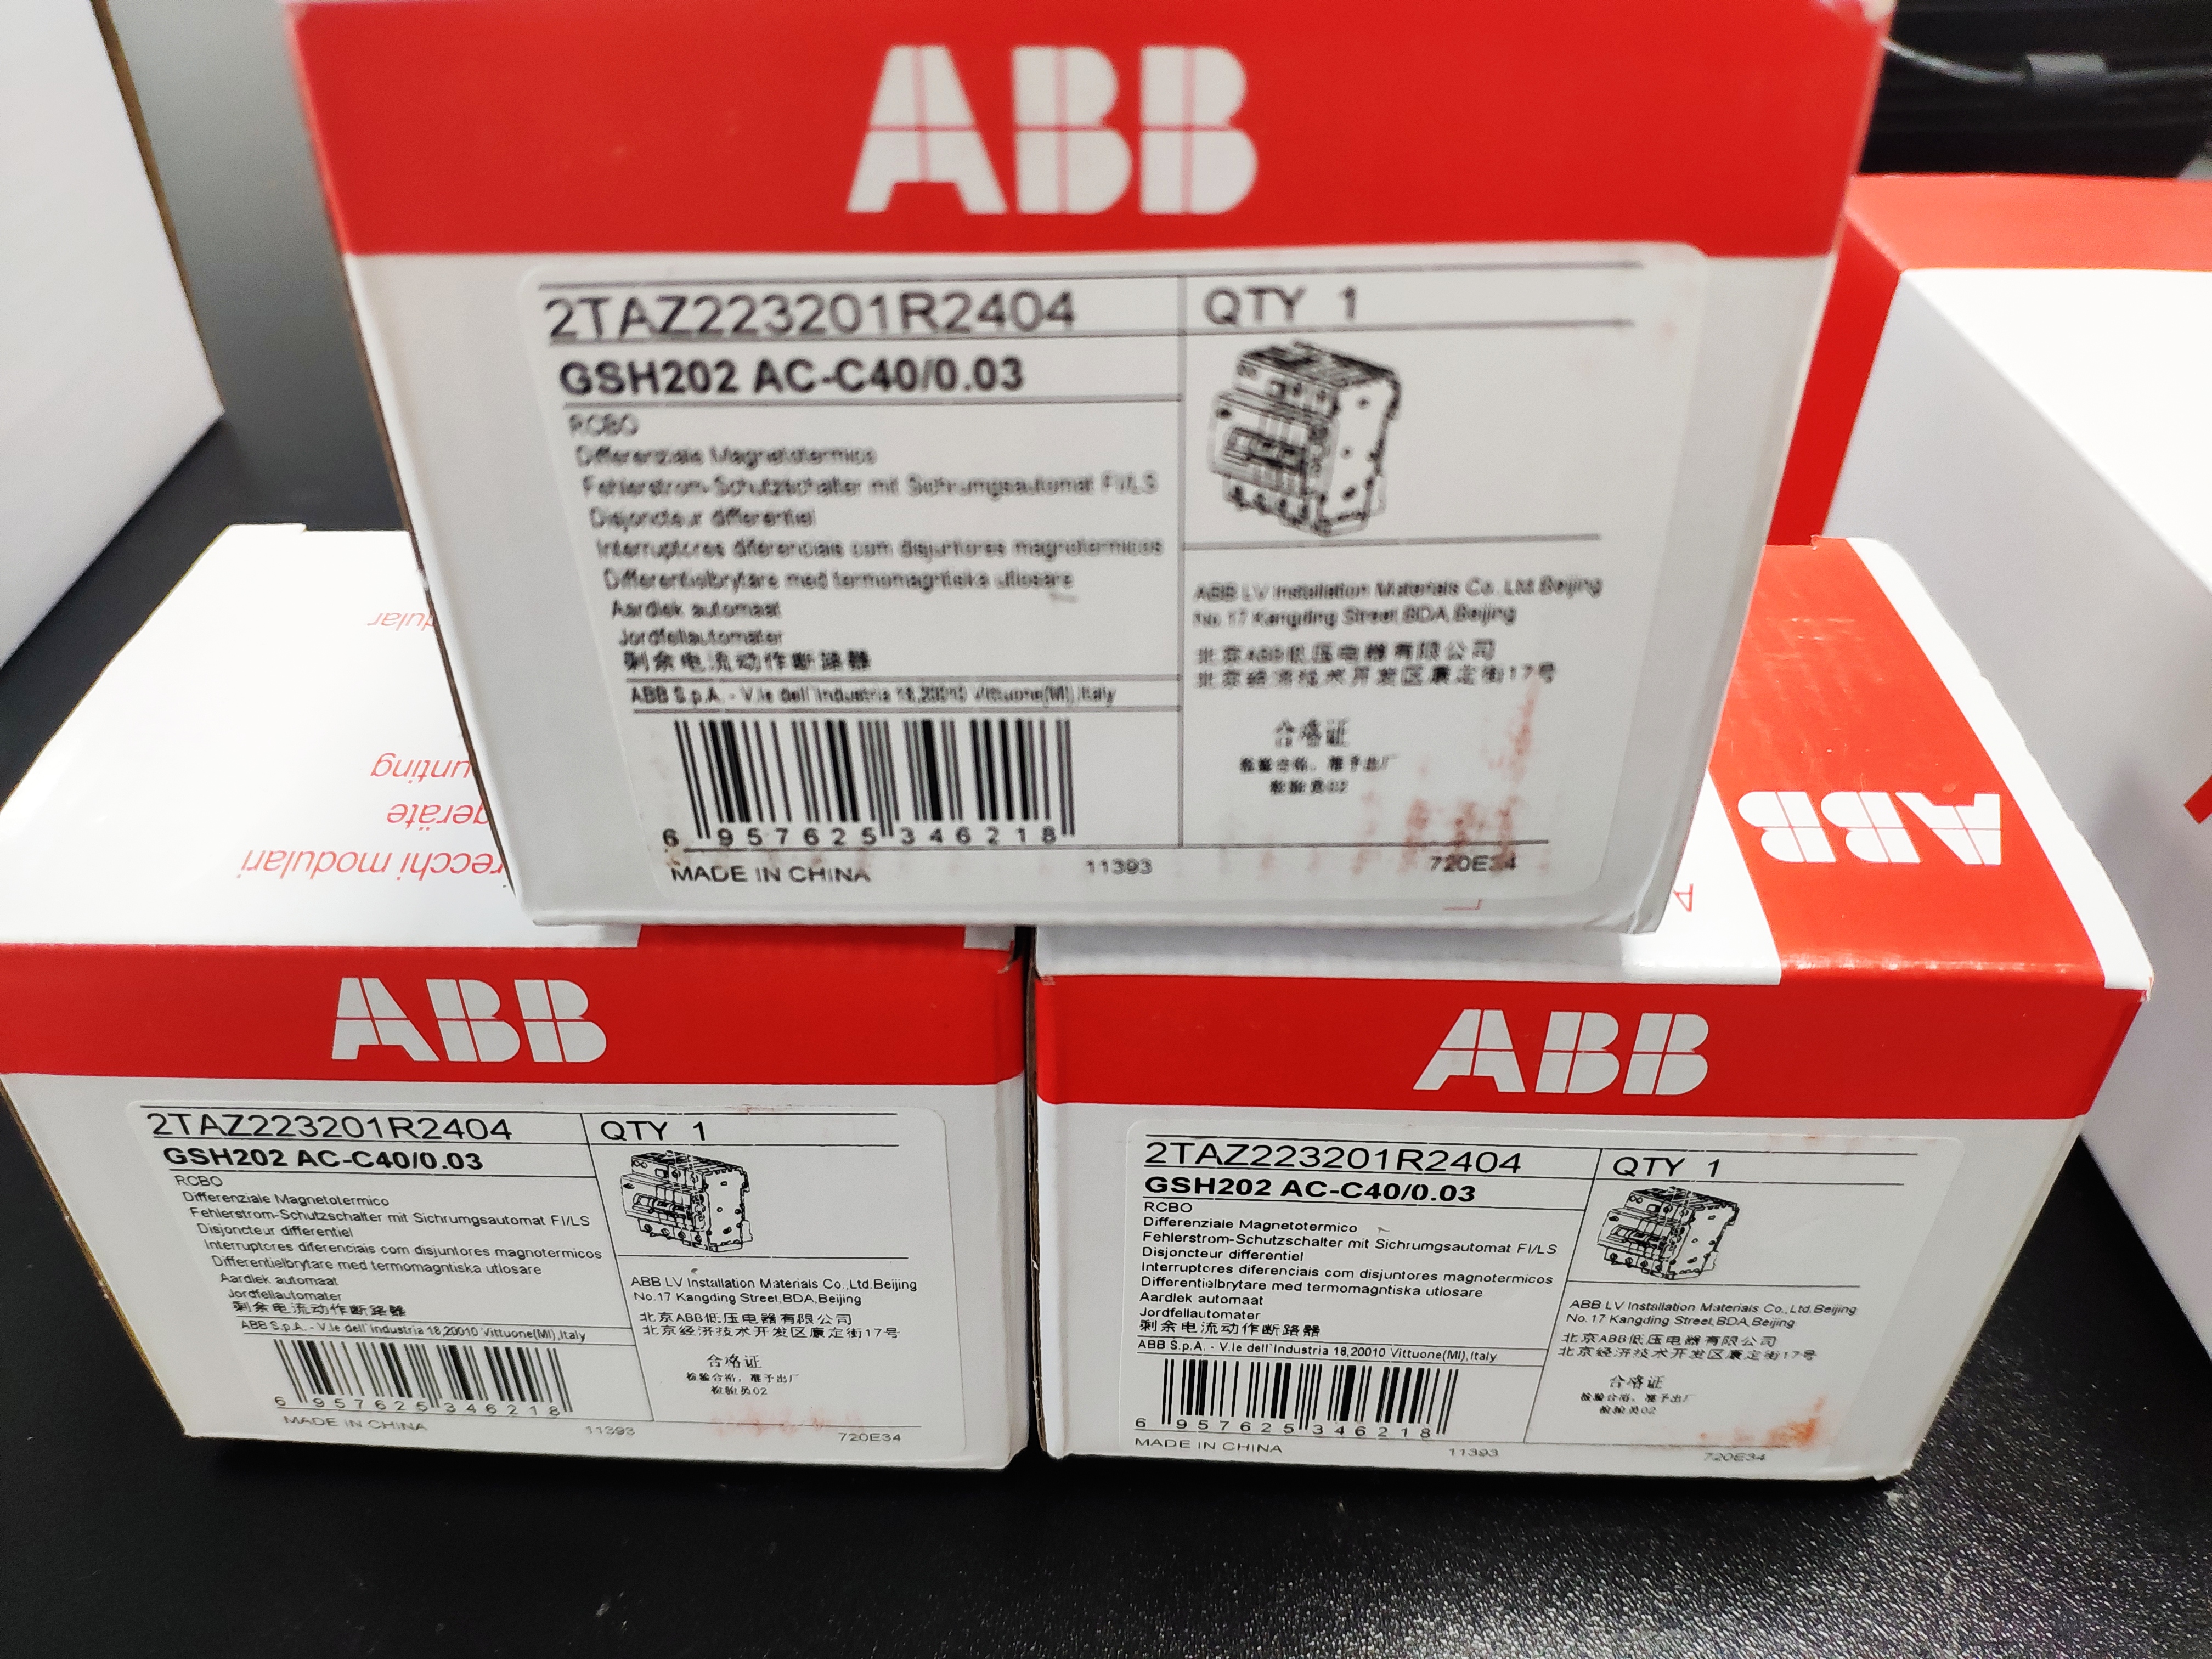 【ABB漏电保护器】GSH202 AC-C40/0.03 ABB,漏电保护器,GSH202 AC-C40/0.03,代理商,厦门